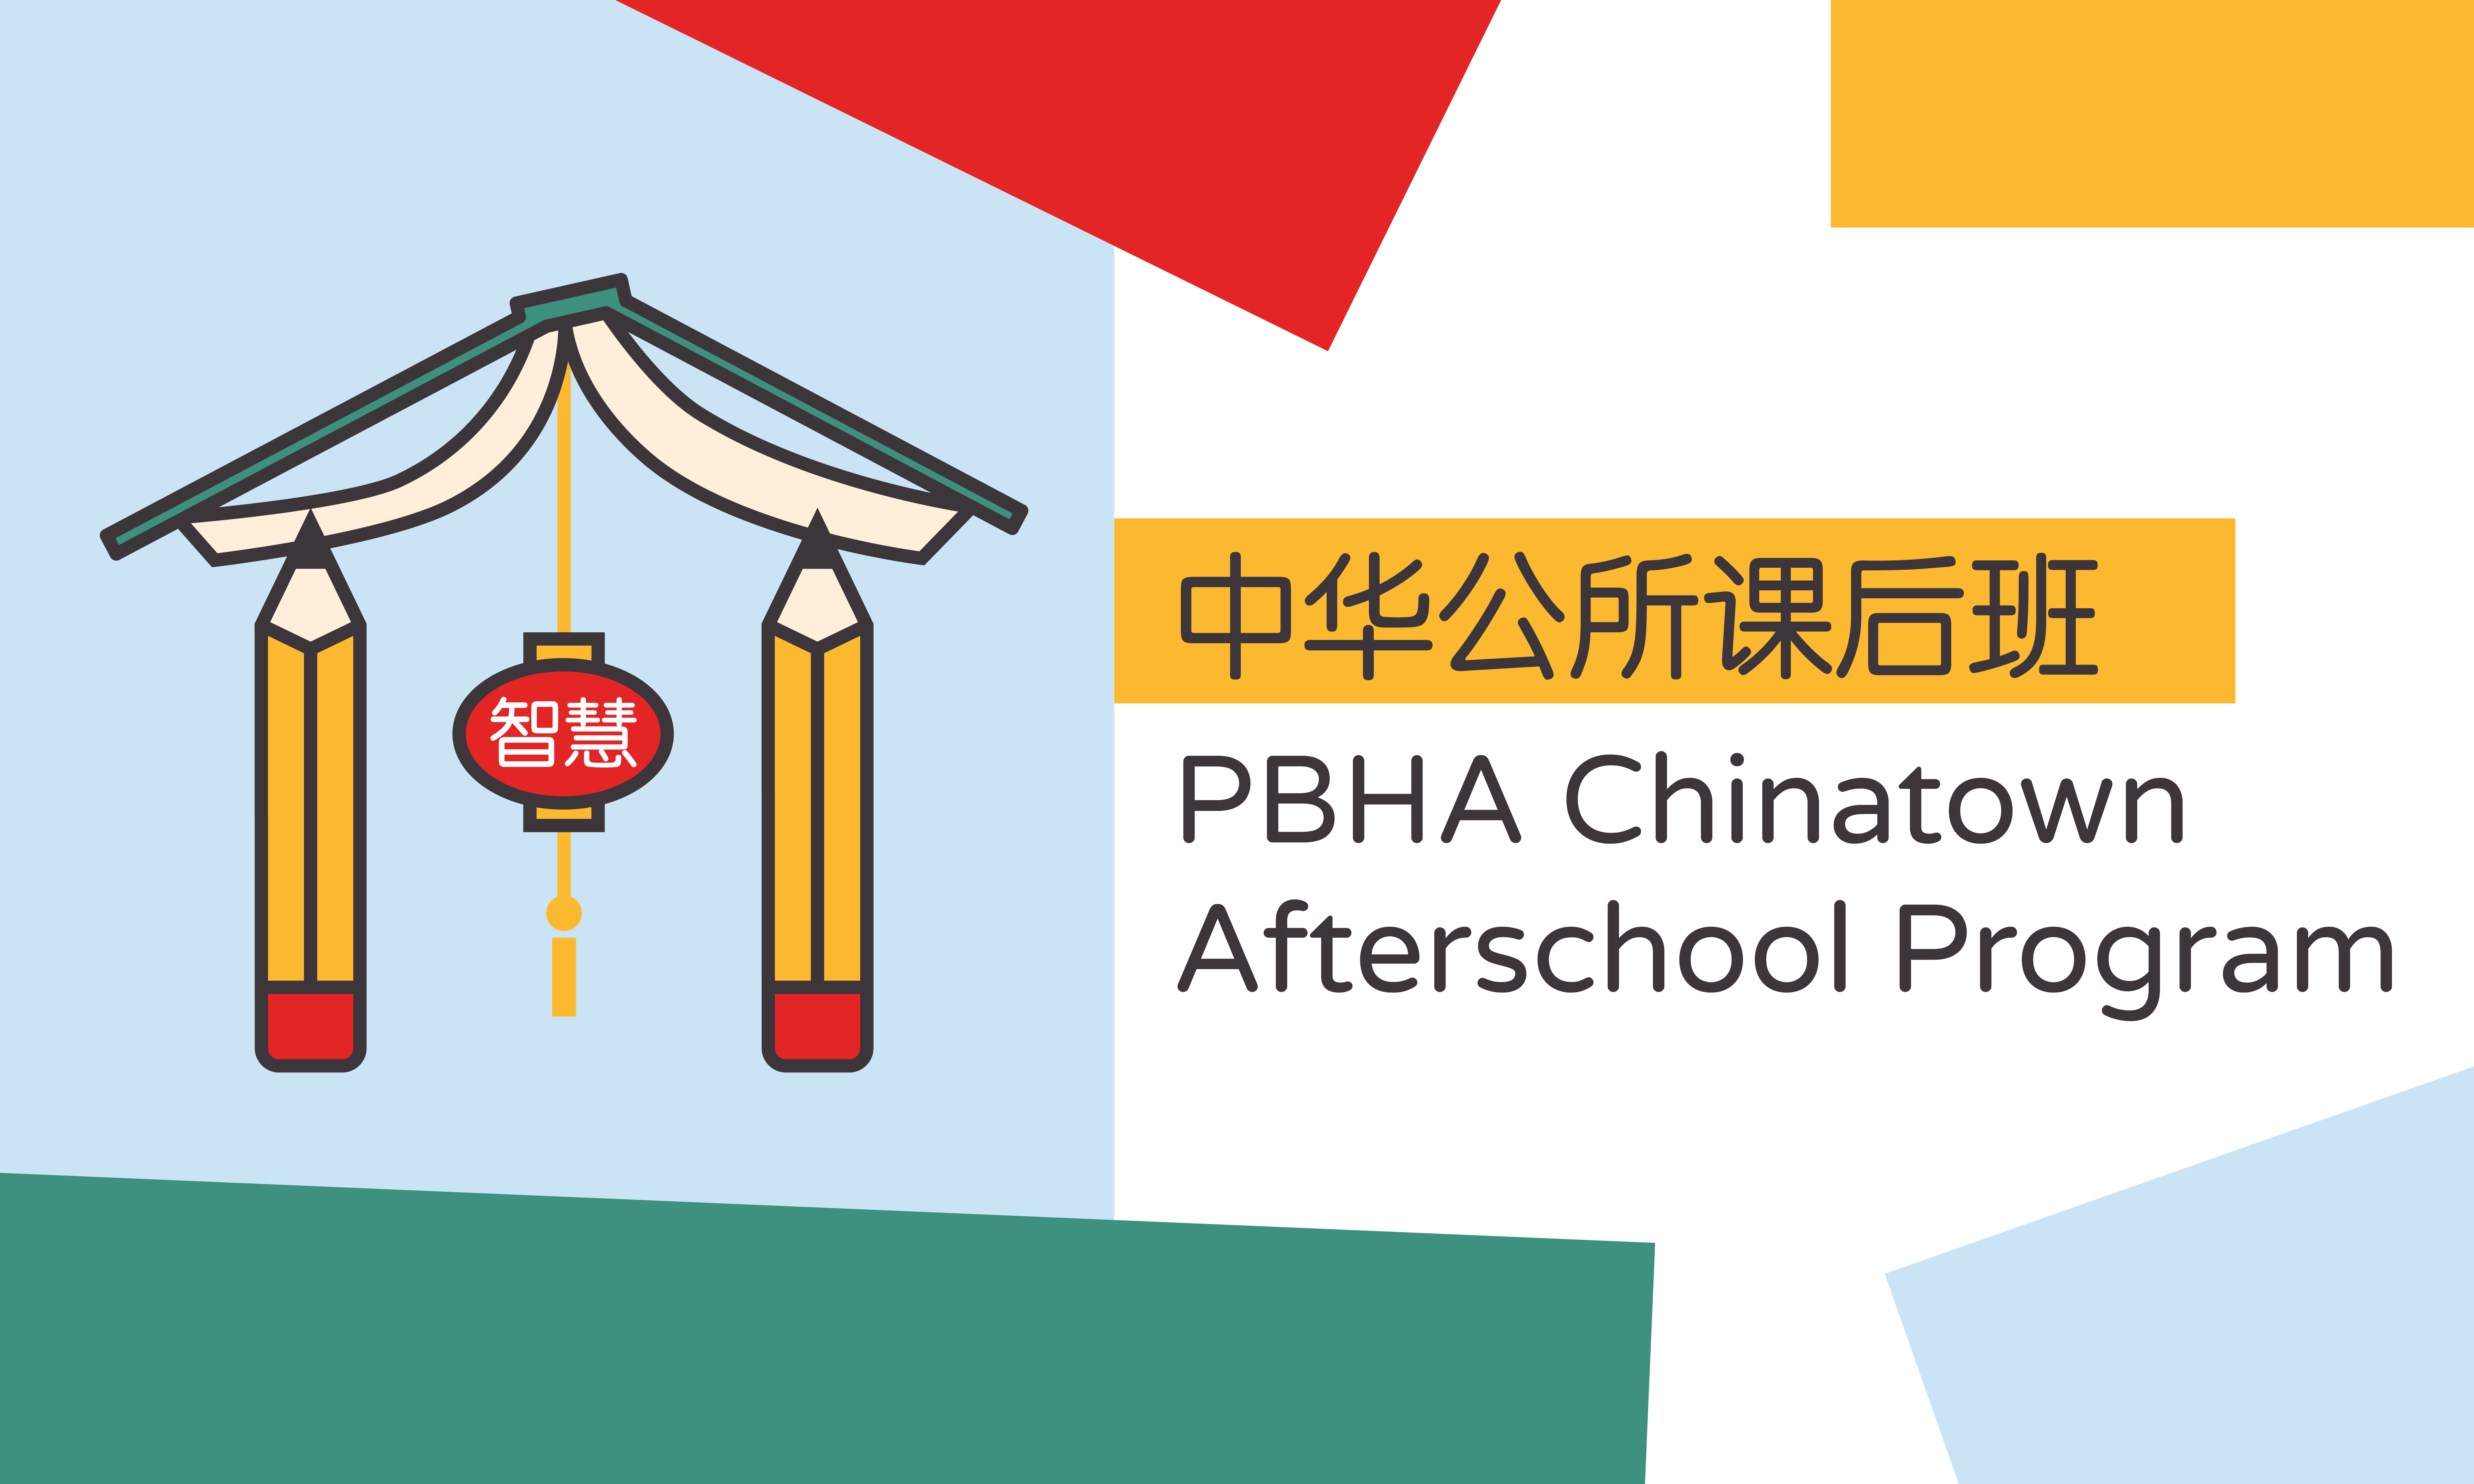 PBHA Chinatown Afterschool Program